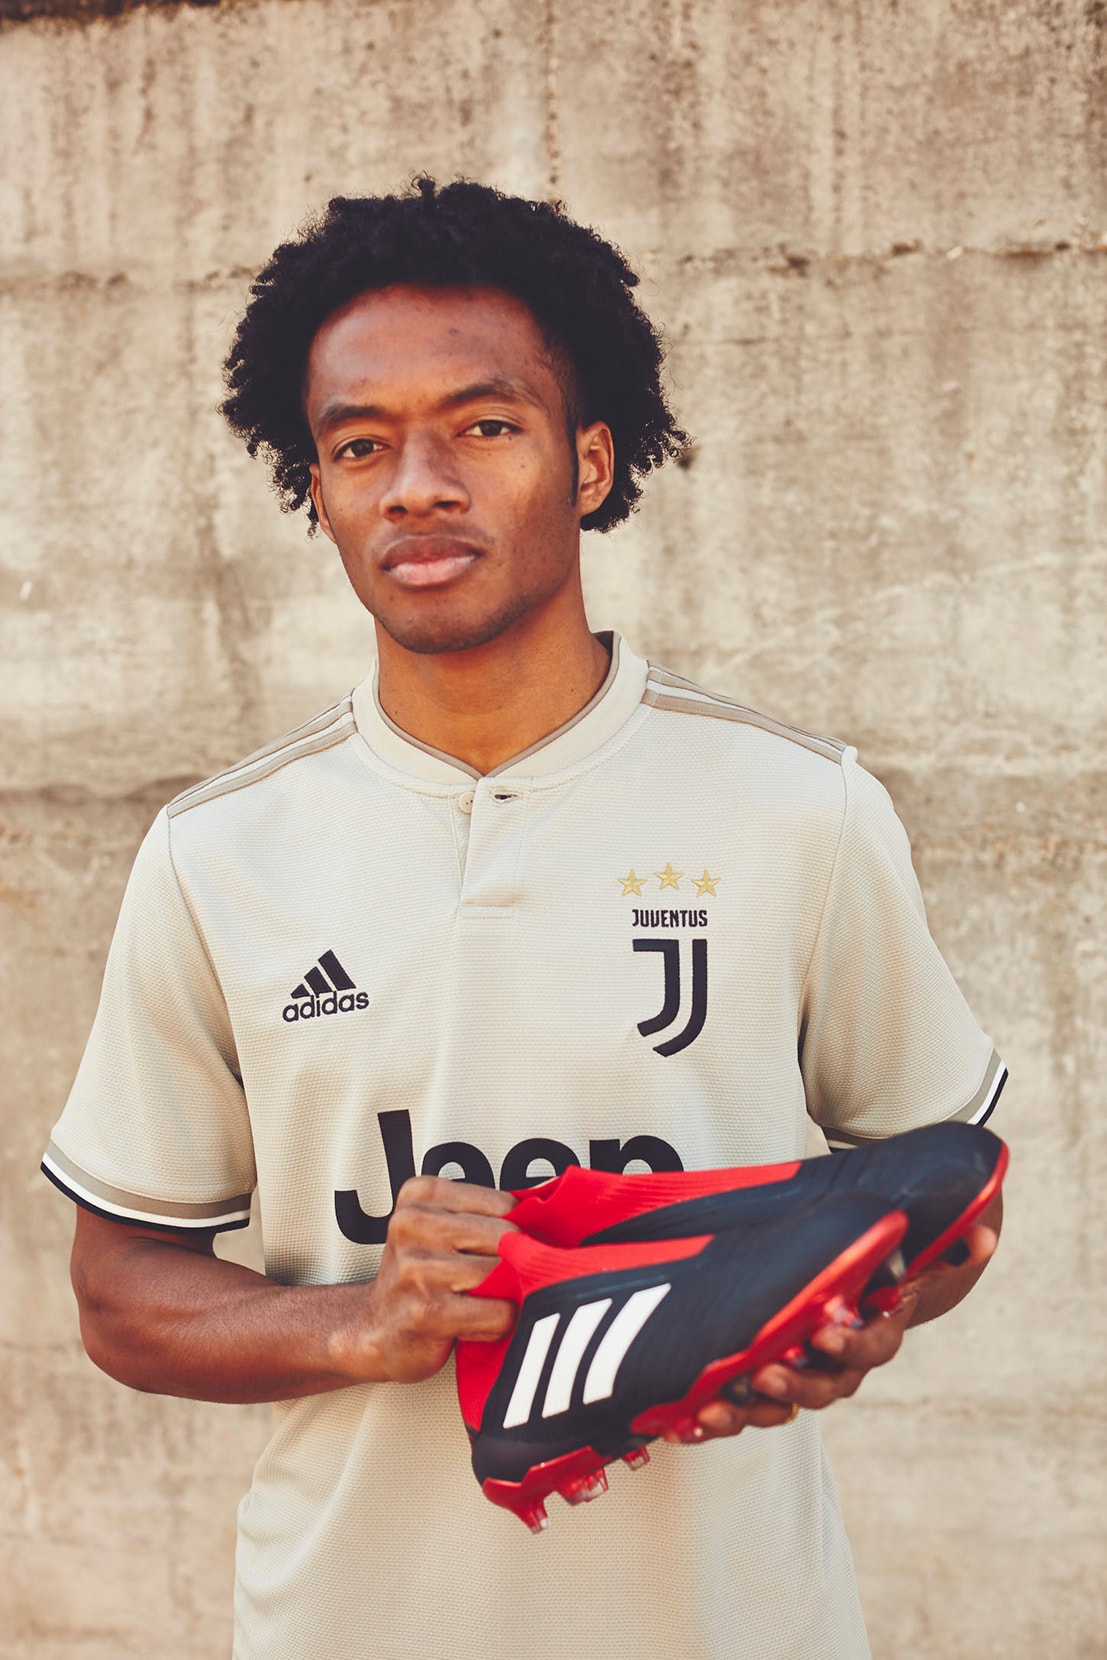 adidas Football Juventus 2018/19 Away Kit Fashion Clothing Sports Cop Purchase Buy Soccer Boots